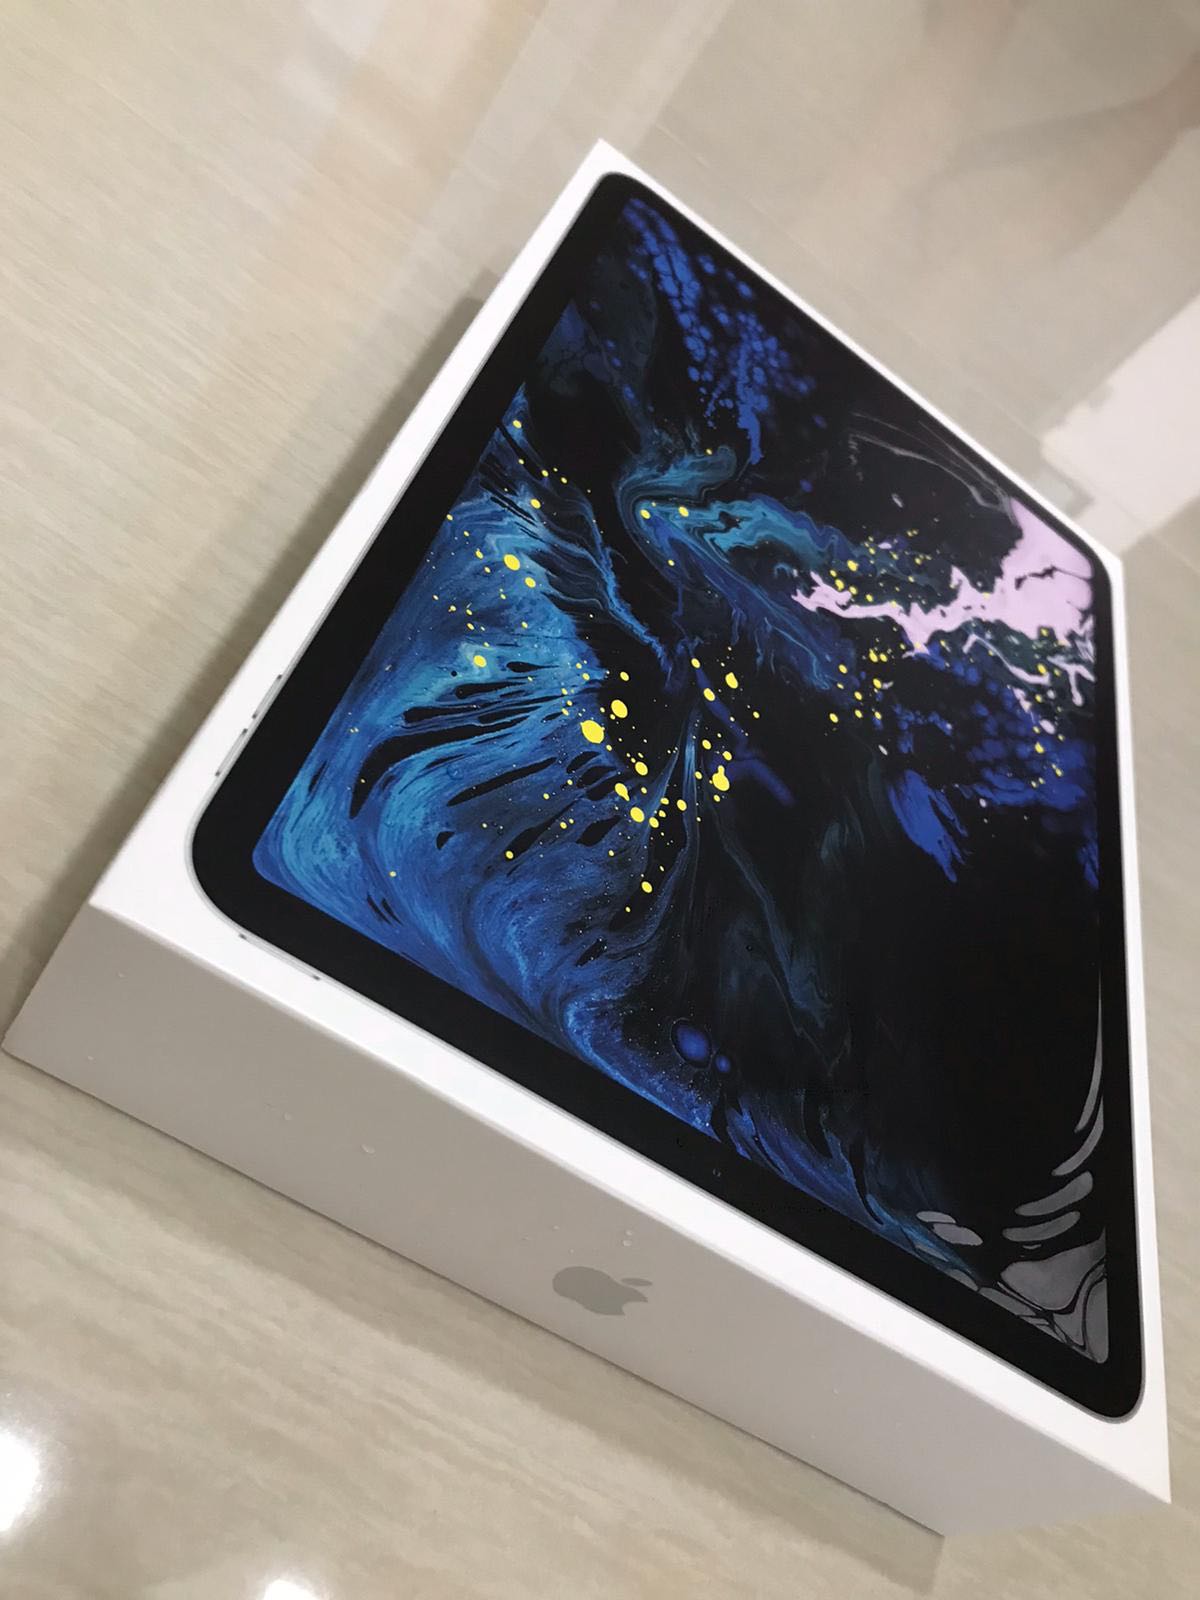 Ipad Pro 2018 11-inch